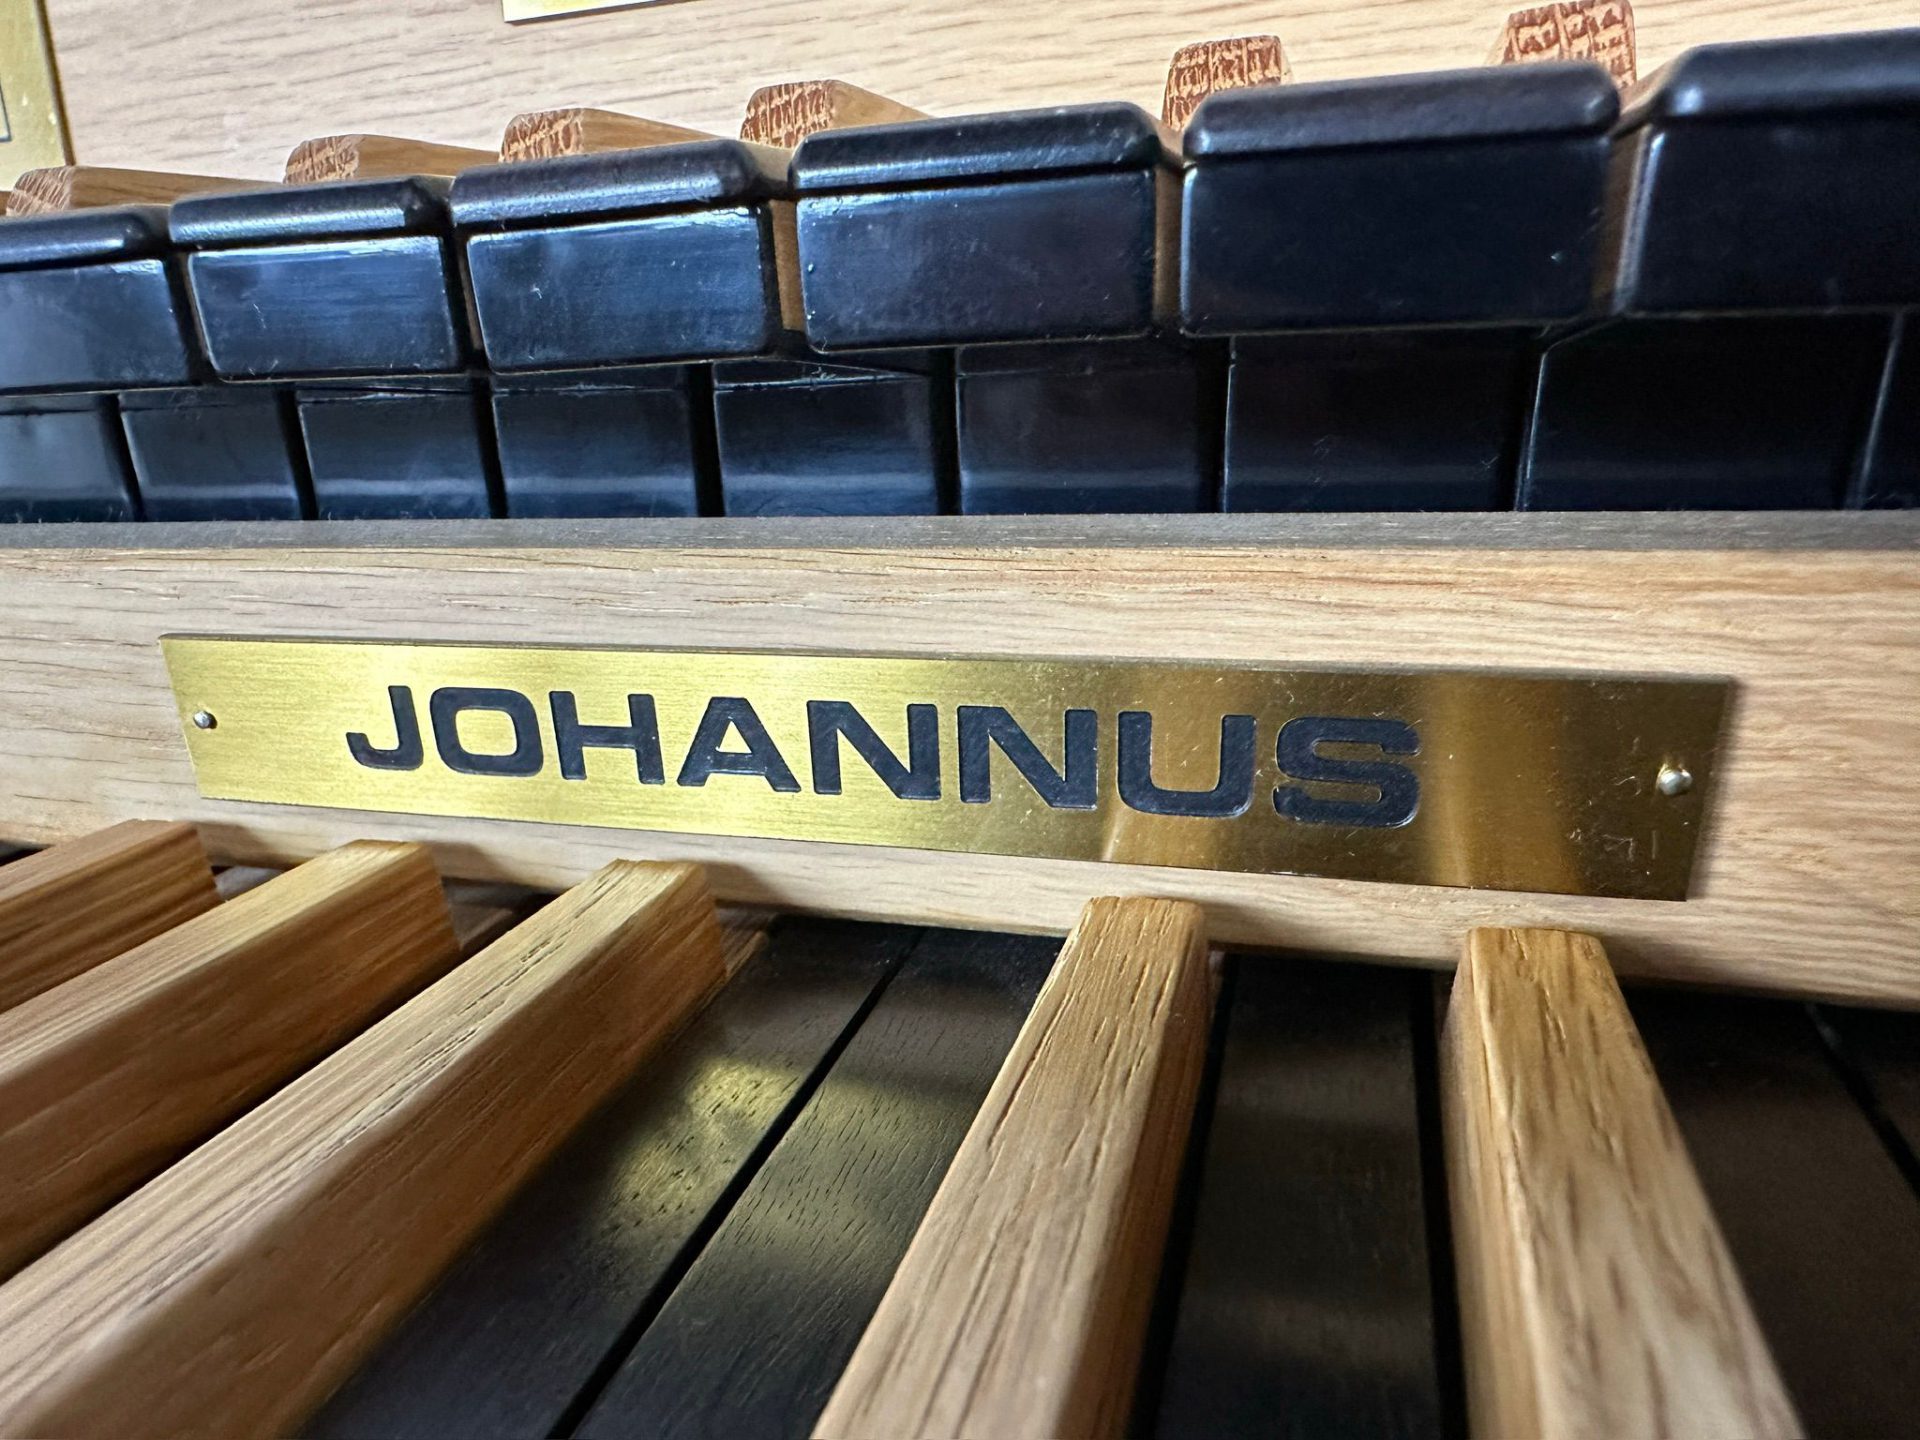 Johannus Symphonica 450